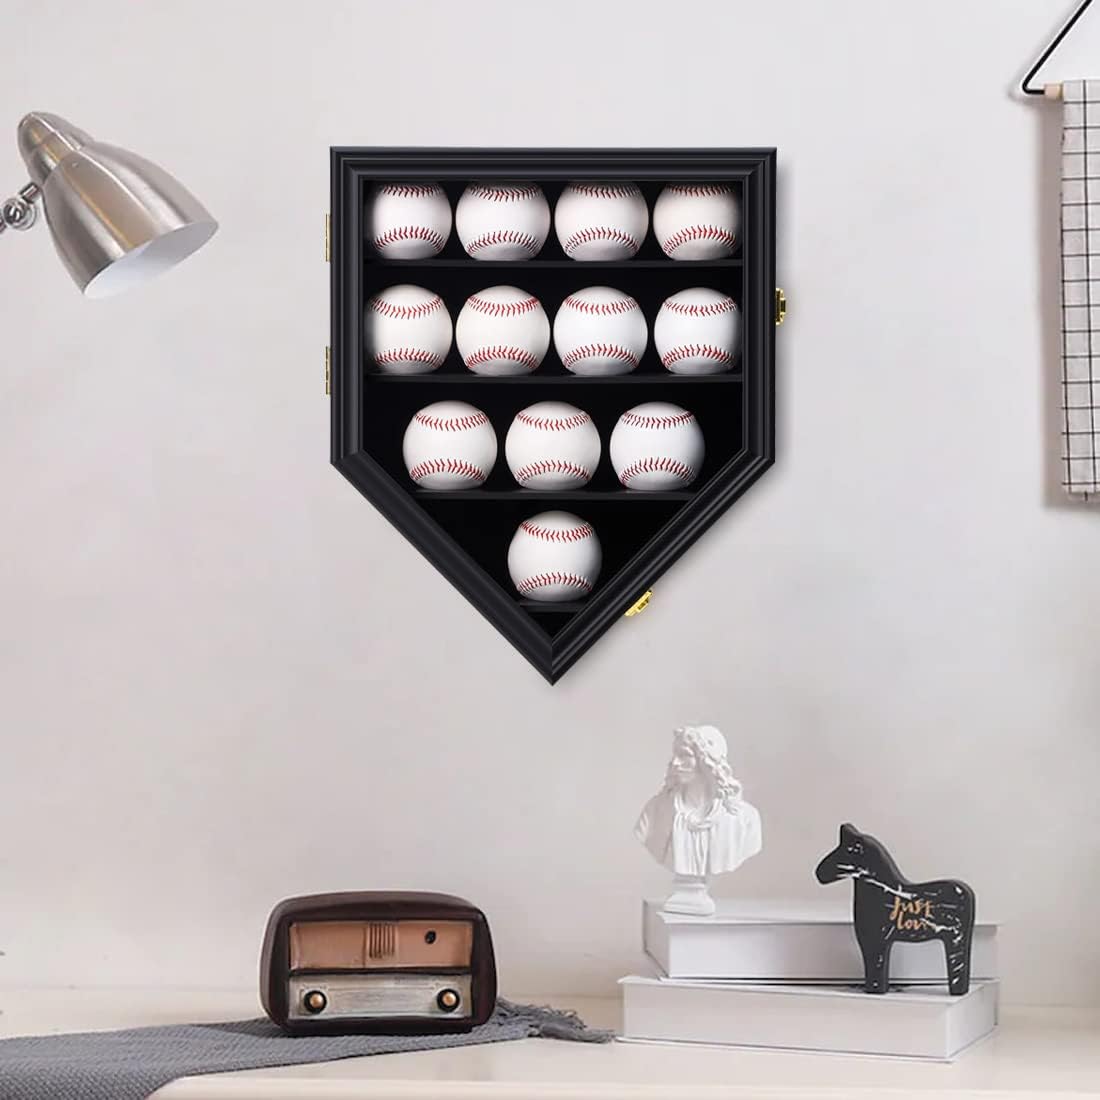 A 12 ball baseball display case.